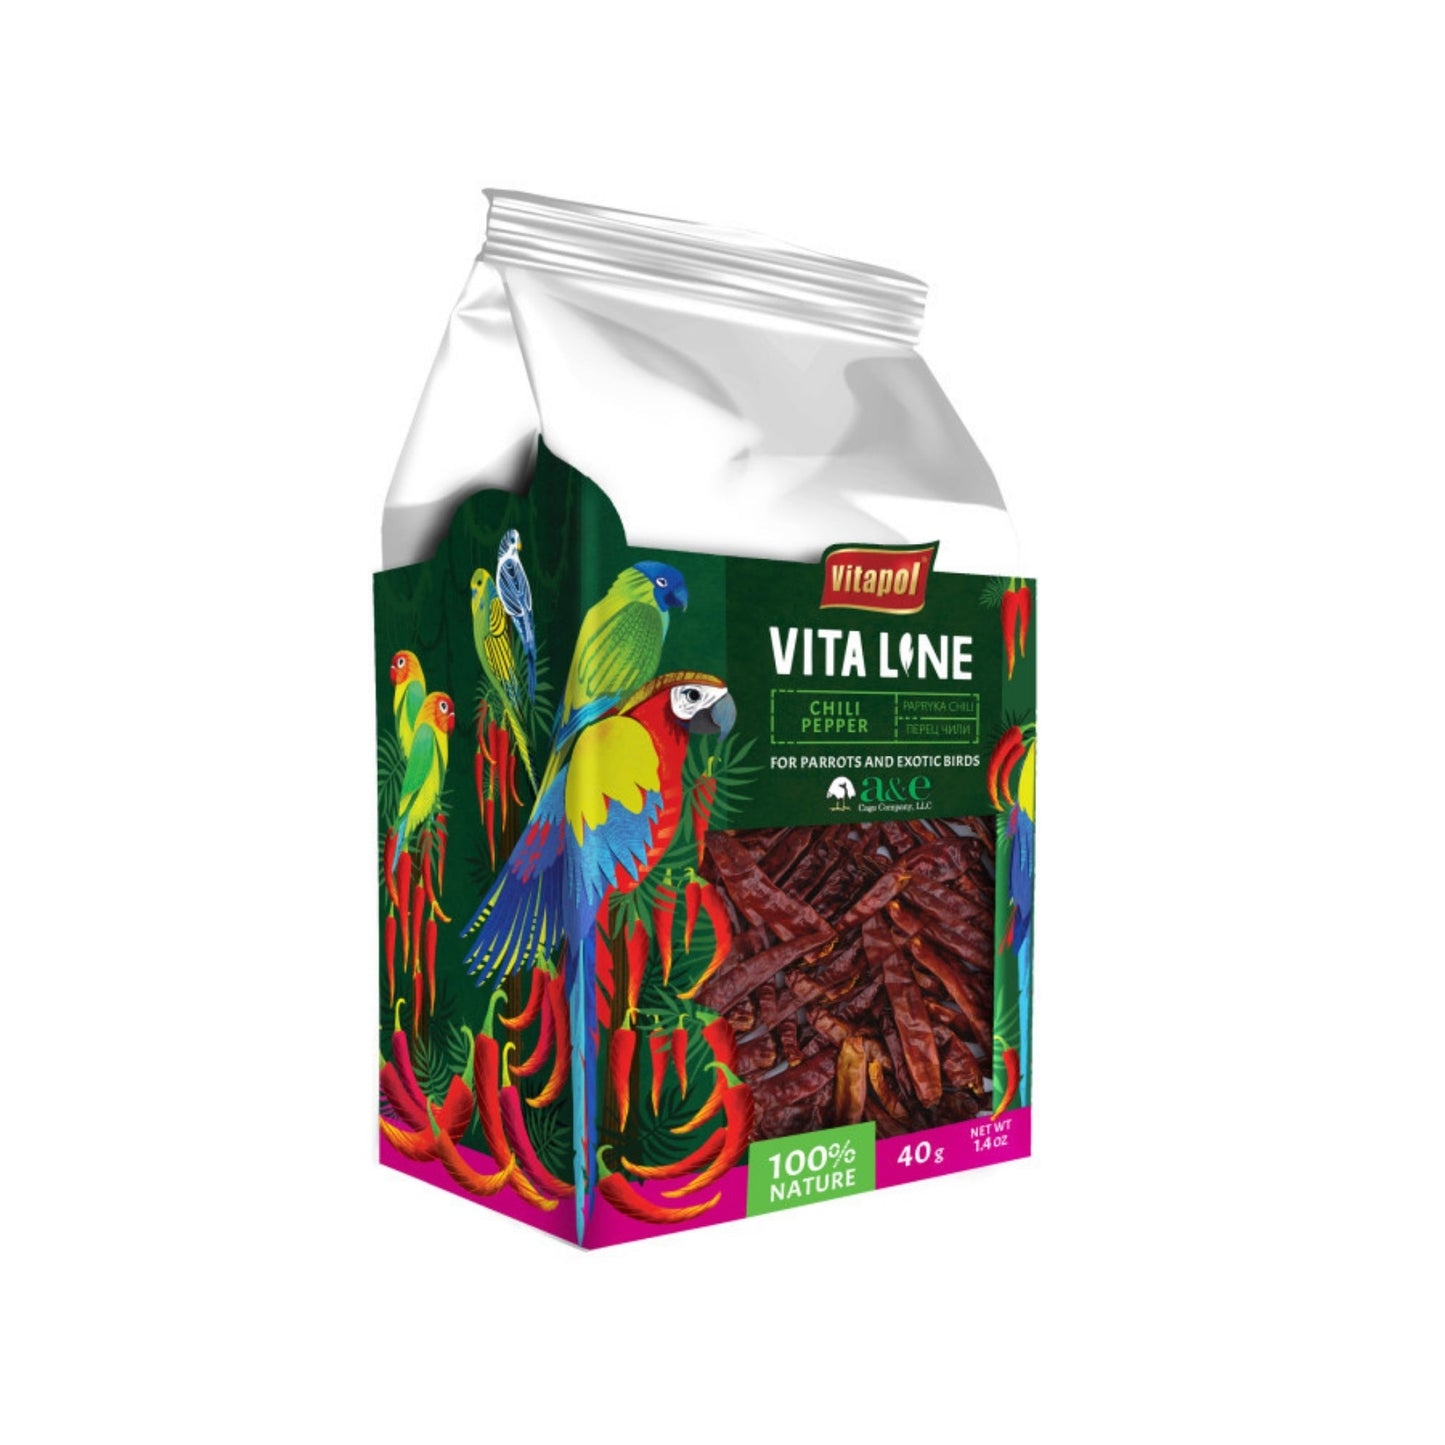 A & E Cages Vitapol Vita Line Chili Pepper for Parrots & Exotic Birds 1ea/150 g